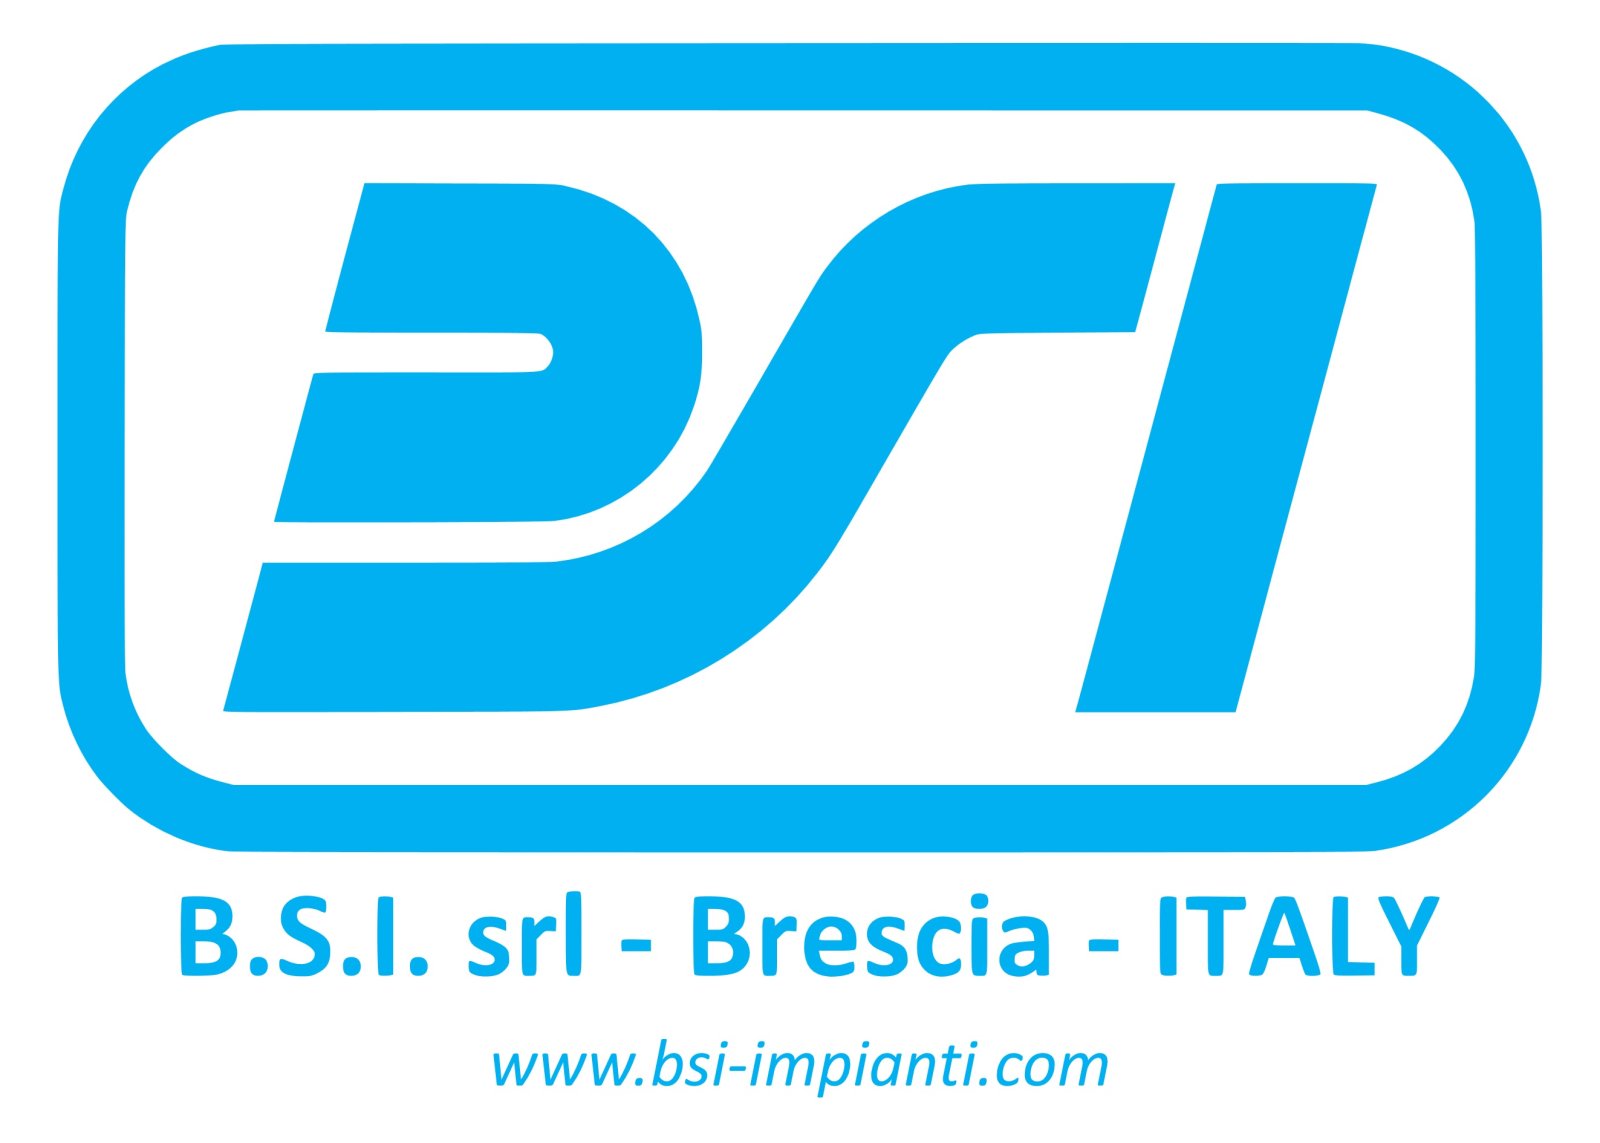 Logo B.S.I. srl - Società Brescia Impianti